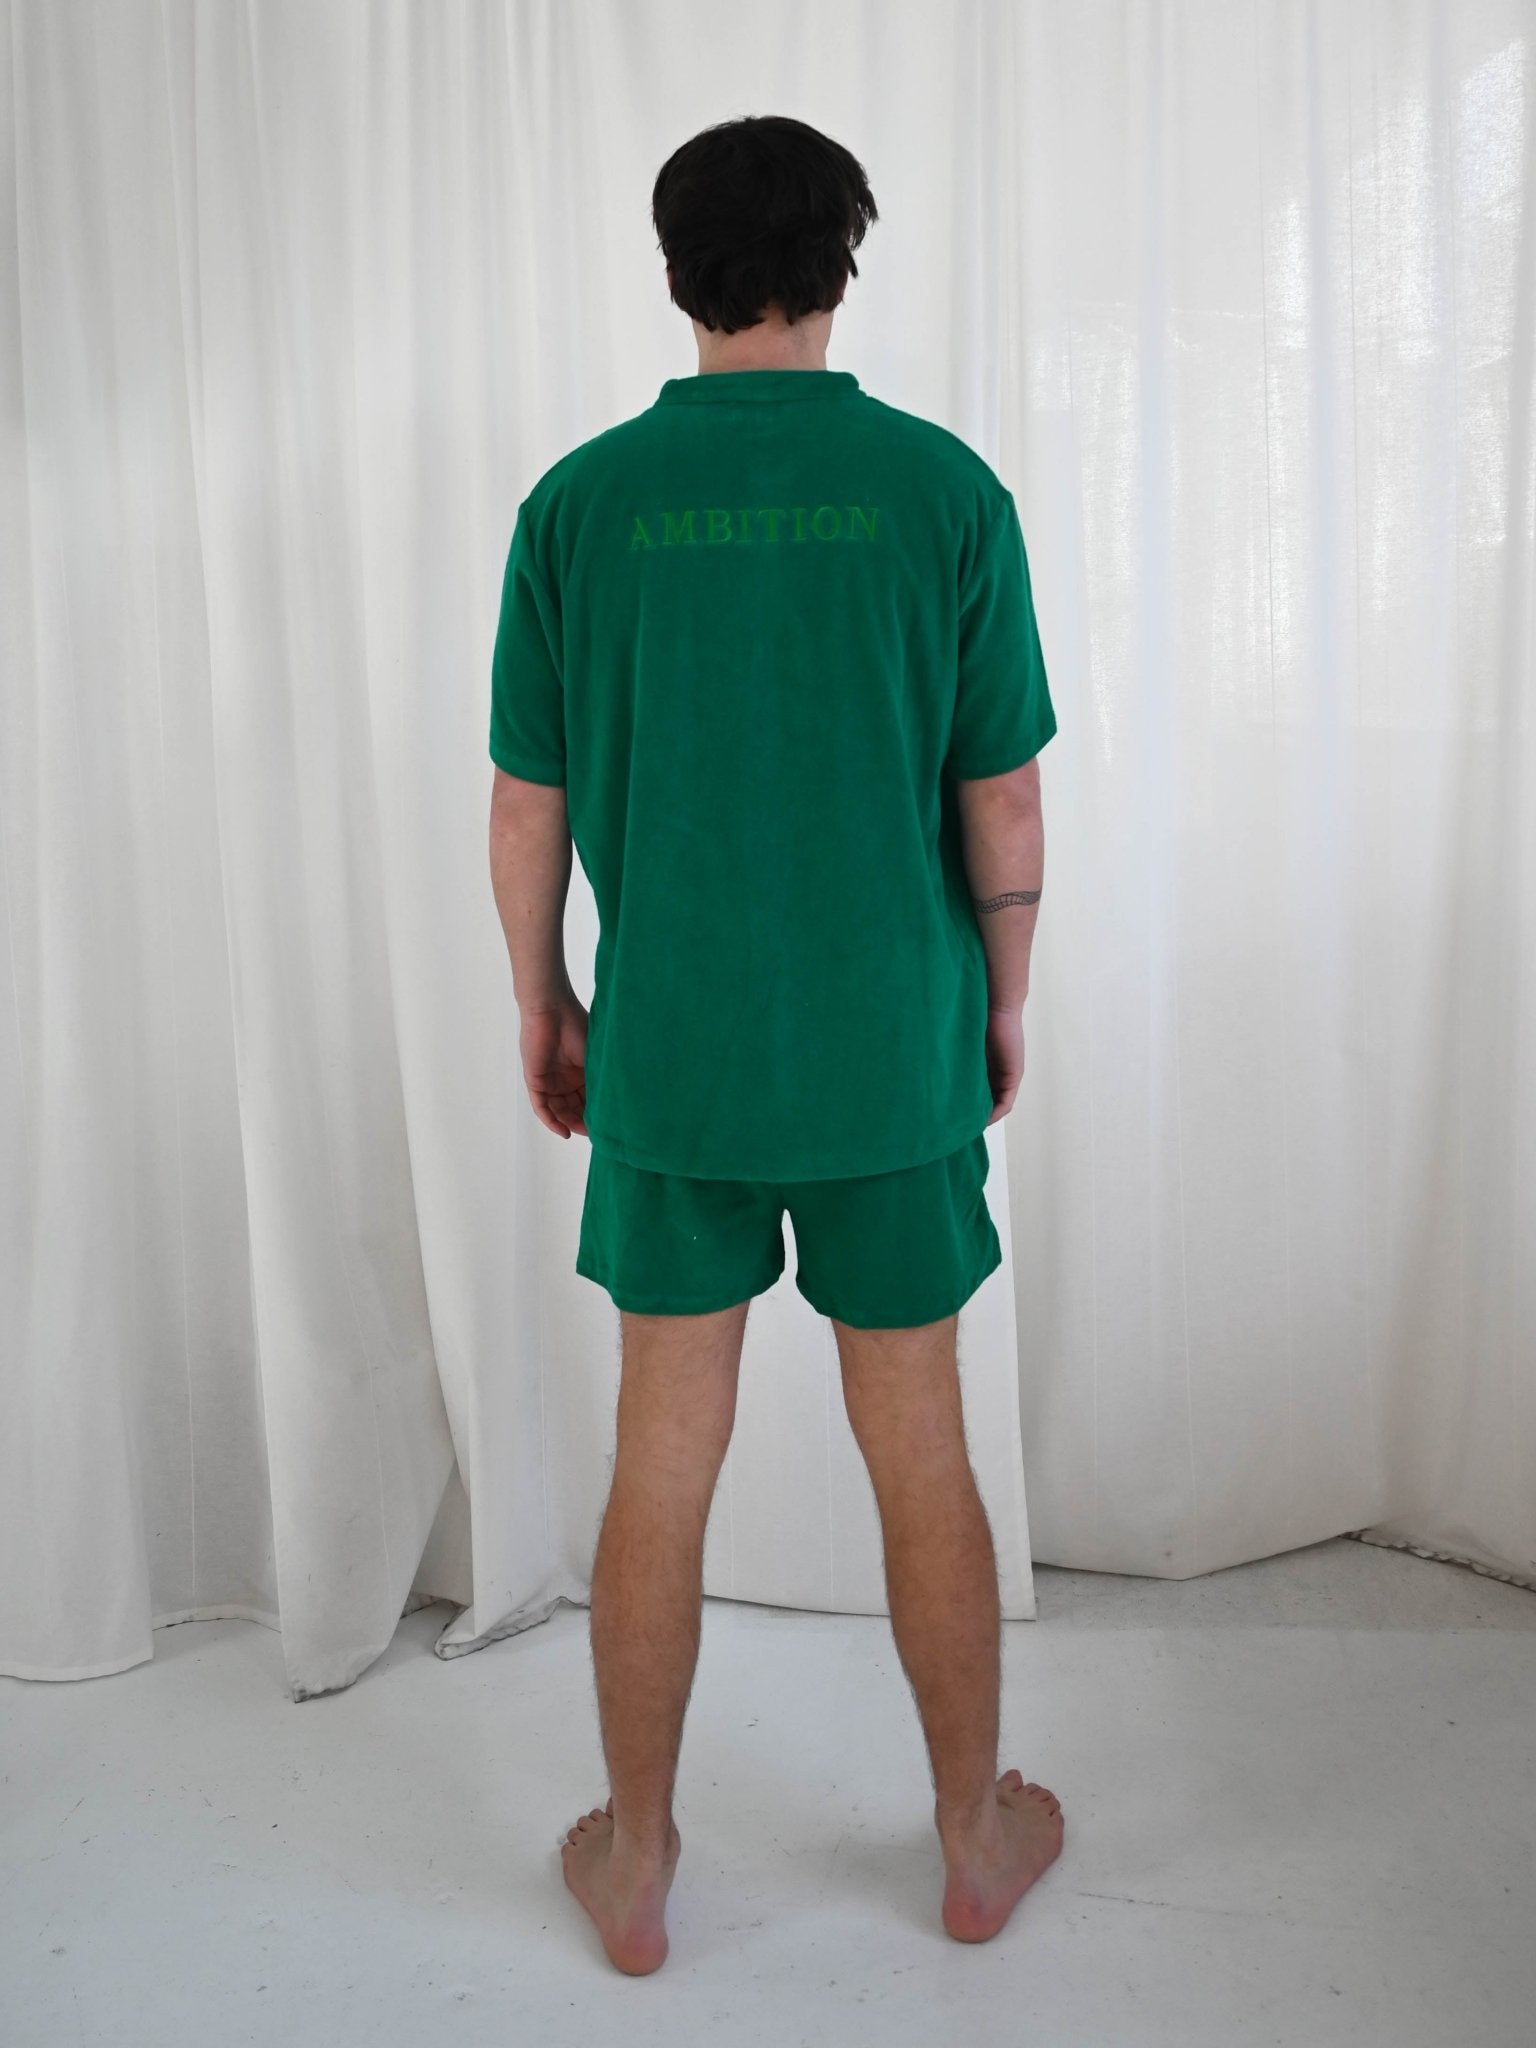 Men's Shirt - Nature-Ambition The Label-stride